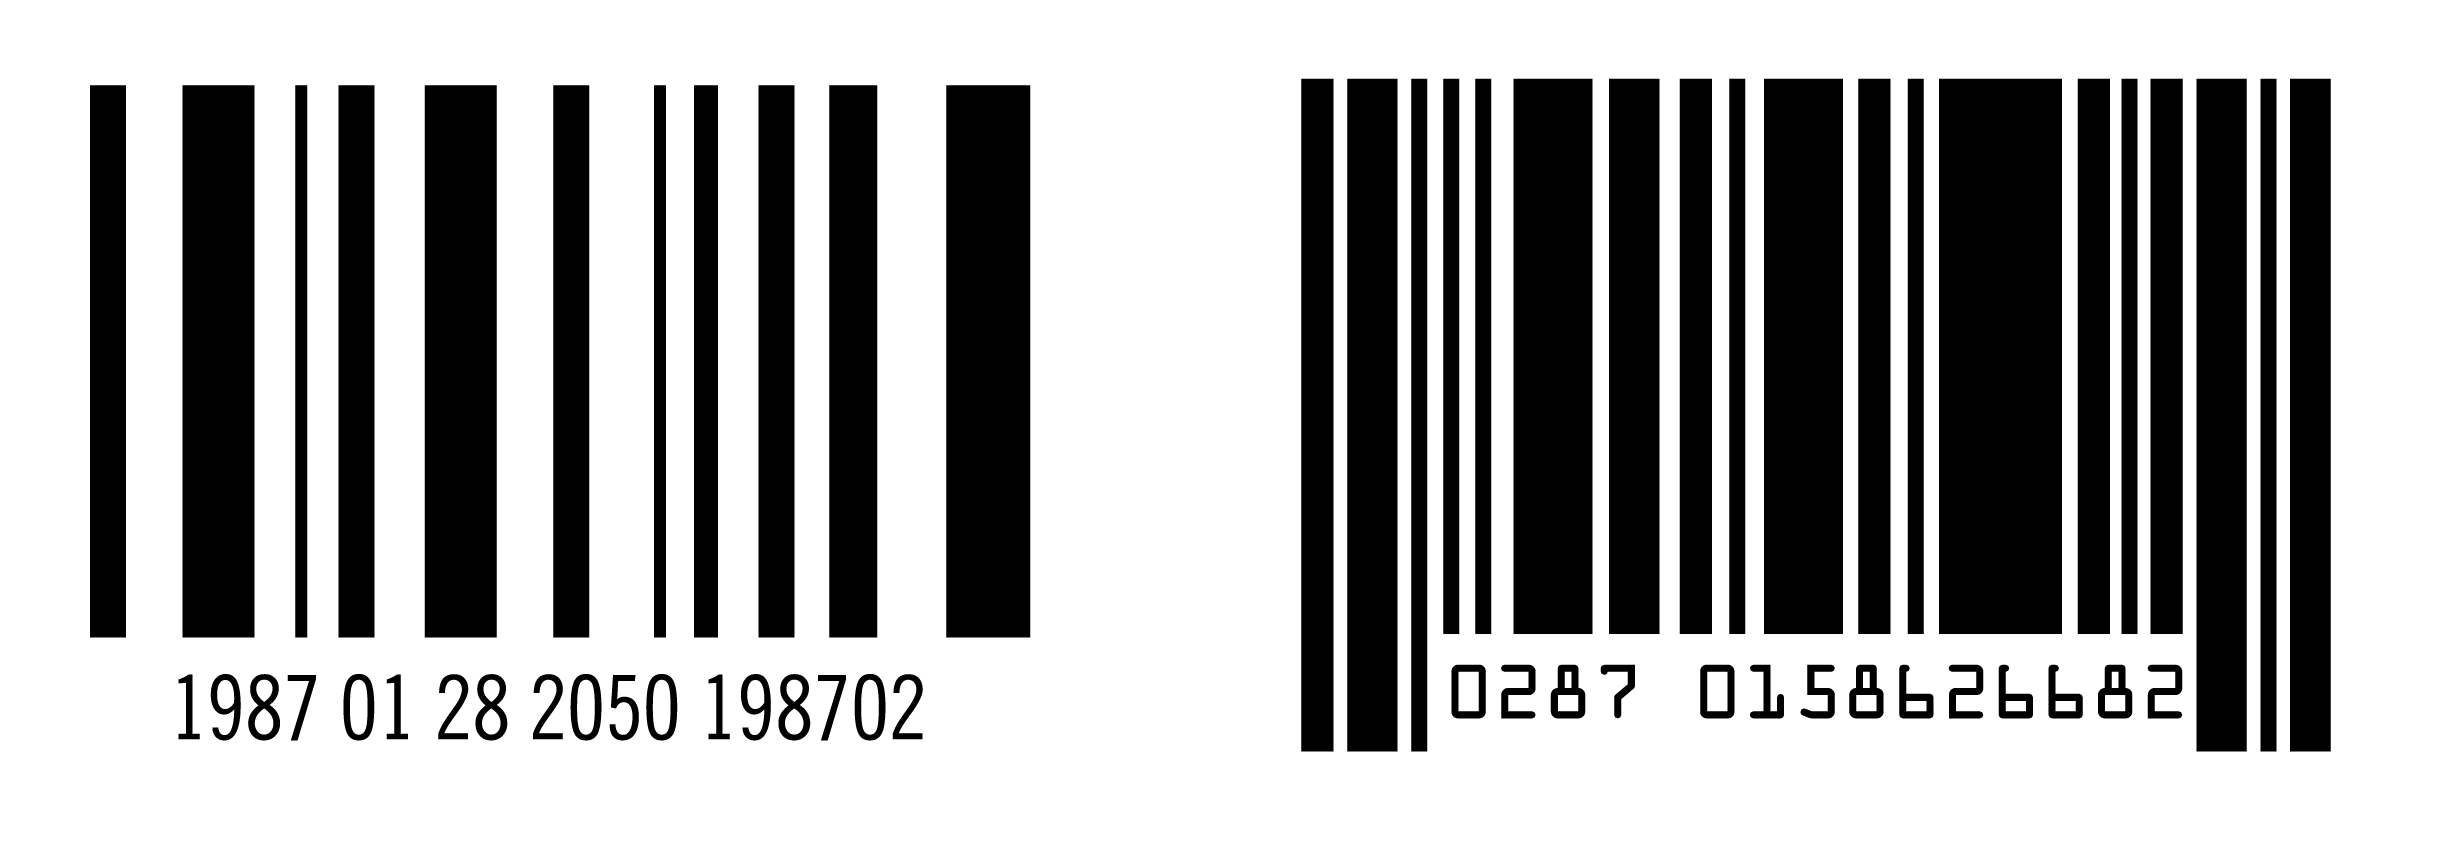 Barcode Scan PNG Transparent Image